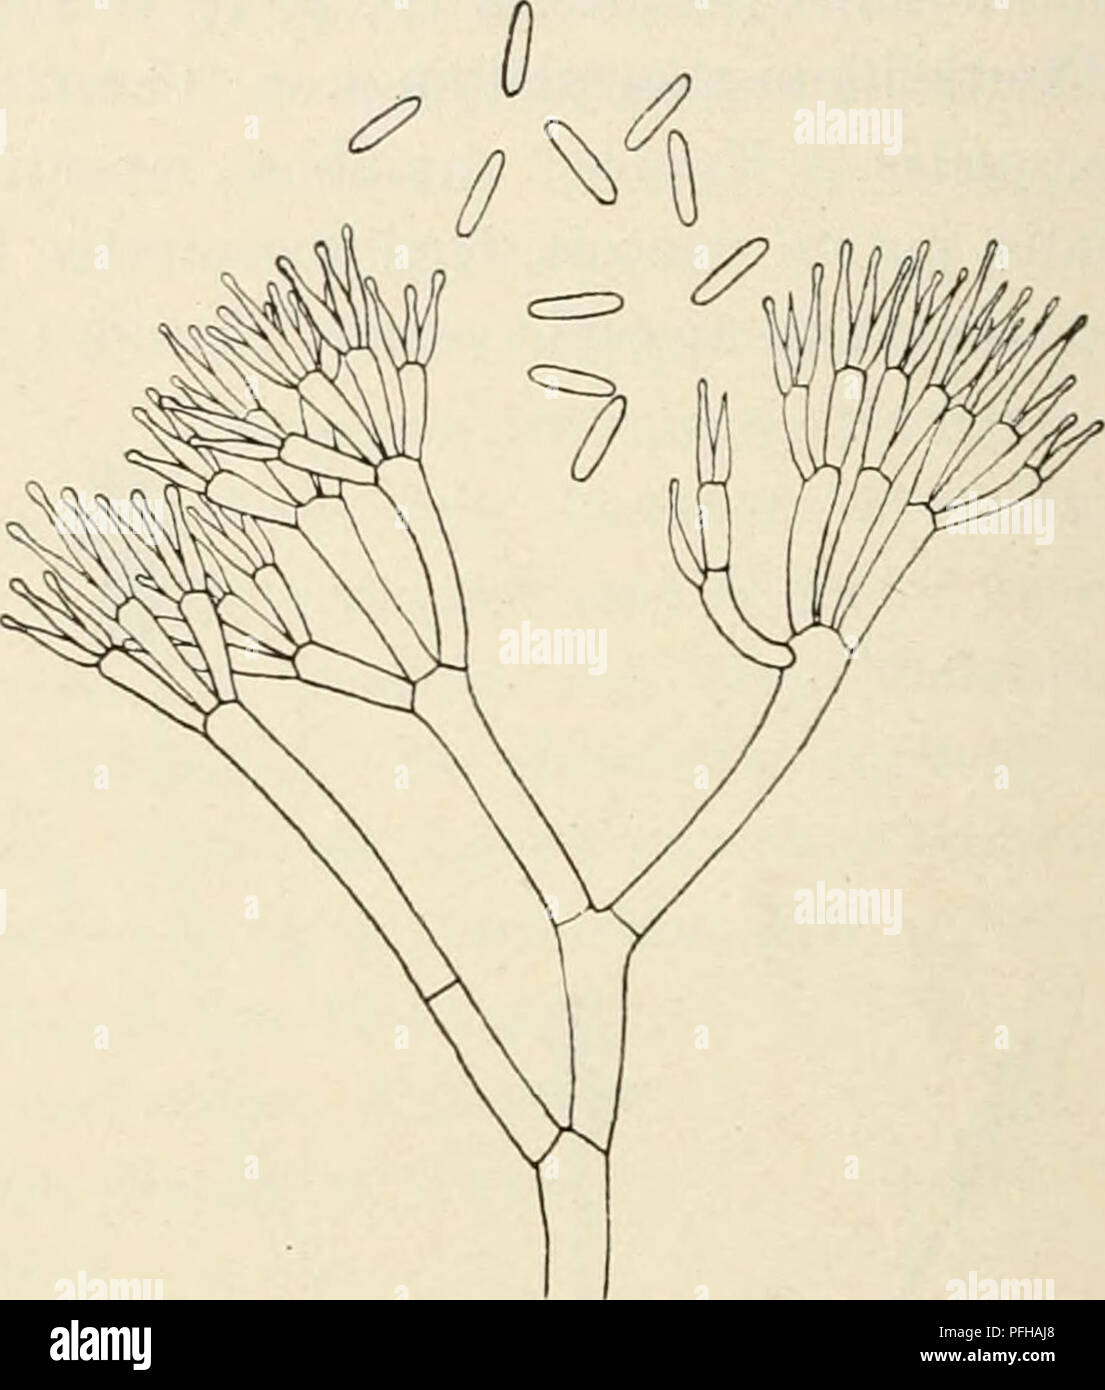 . Dansk botanisk arkiv. Plants; Plants -- Denmark. Fig. 35. Acrocylindrium elegans. 510 :1. Fig. 34. Verticillum pani culatum. 2 sammen- voksede Konidiebærere. 190:1. * Verticillium sulplmrellum Sacc. Paa ned- faldne Frugter af Quercus robur. S, Jægers- borg Dyrehave, Marts 1911. ?Verticillium lutescens (Schw.) Sacc. Paa nedfaldne Frugter af Acer pseudoplatanus. S. Ermelunden, Febr. 1912. *Acrocylindrium elegans Bon. Paa nedfaldne Frugter af Crataegus monogyna. S. Jægersborg Dyrehave, April 1912. (Fig. 35). Konidierne 7—9 X 2—2.5//. *Spicaria nivea Harz. Paa raaddent Ved. S. Folehaven, Juni 19 Stock Photo